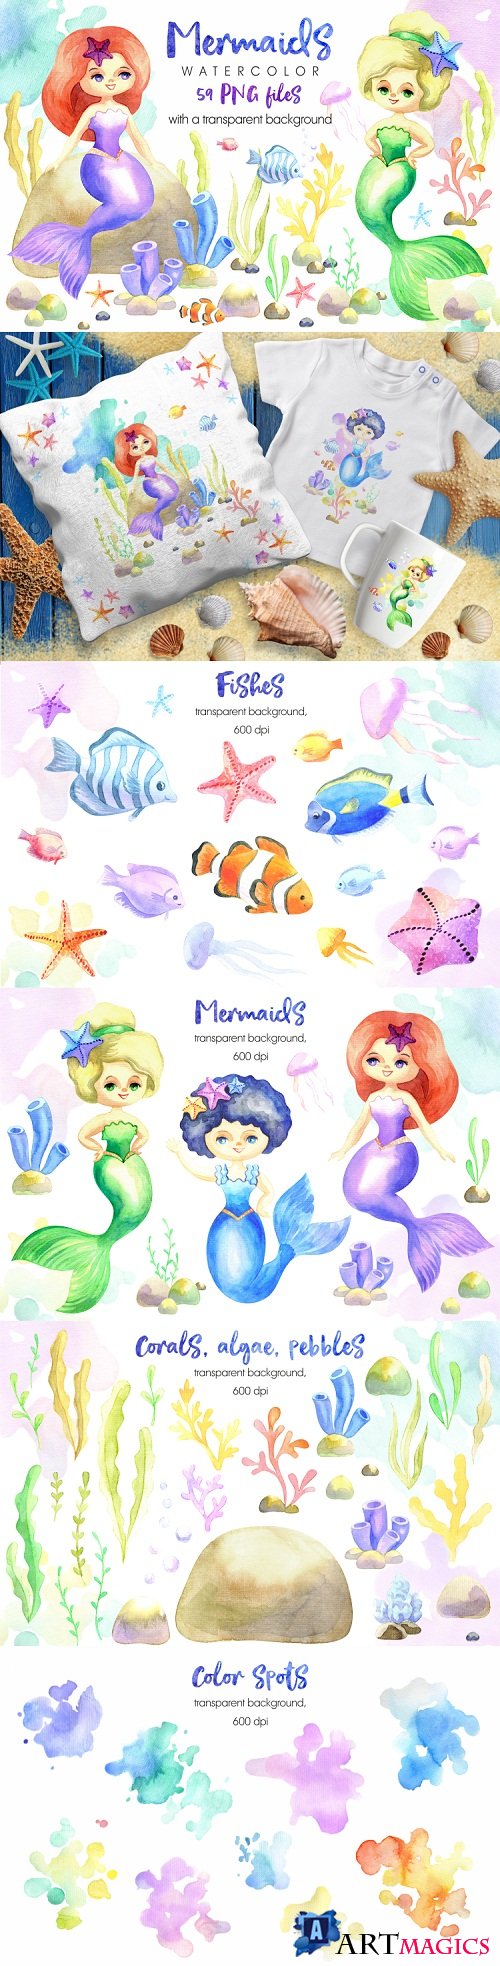 Mermaids. Watercolor cliparts set - 257895